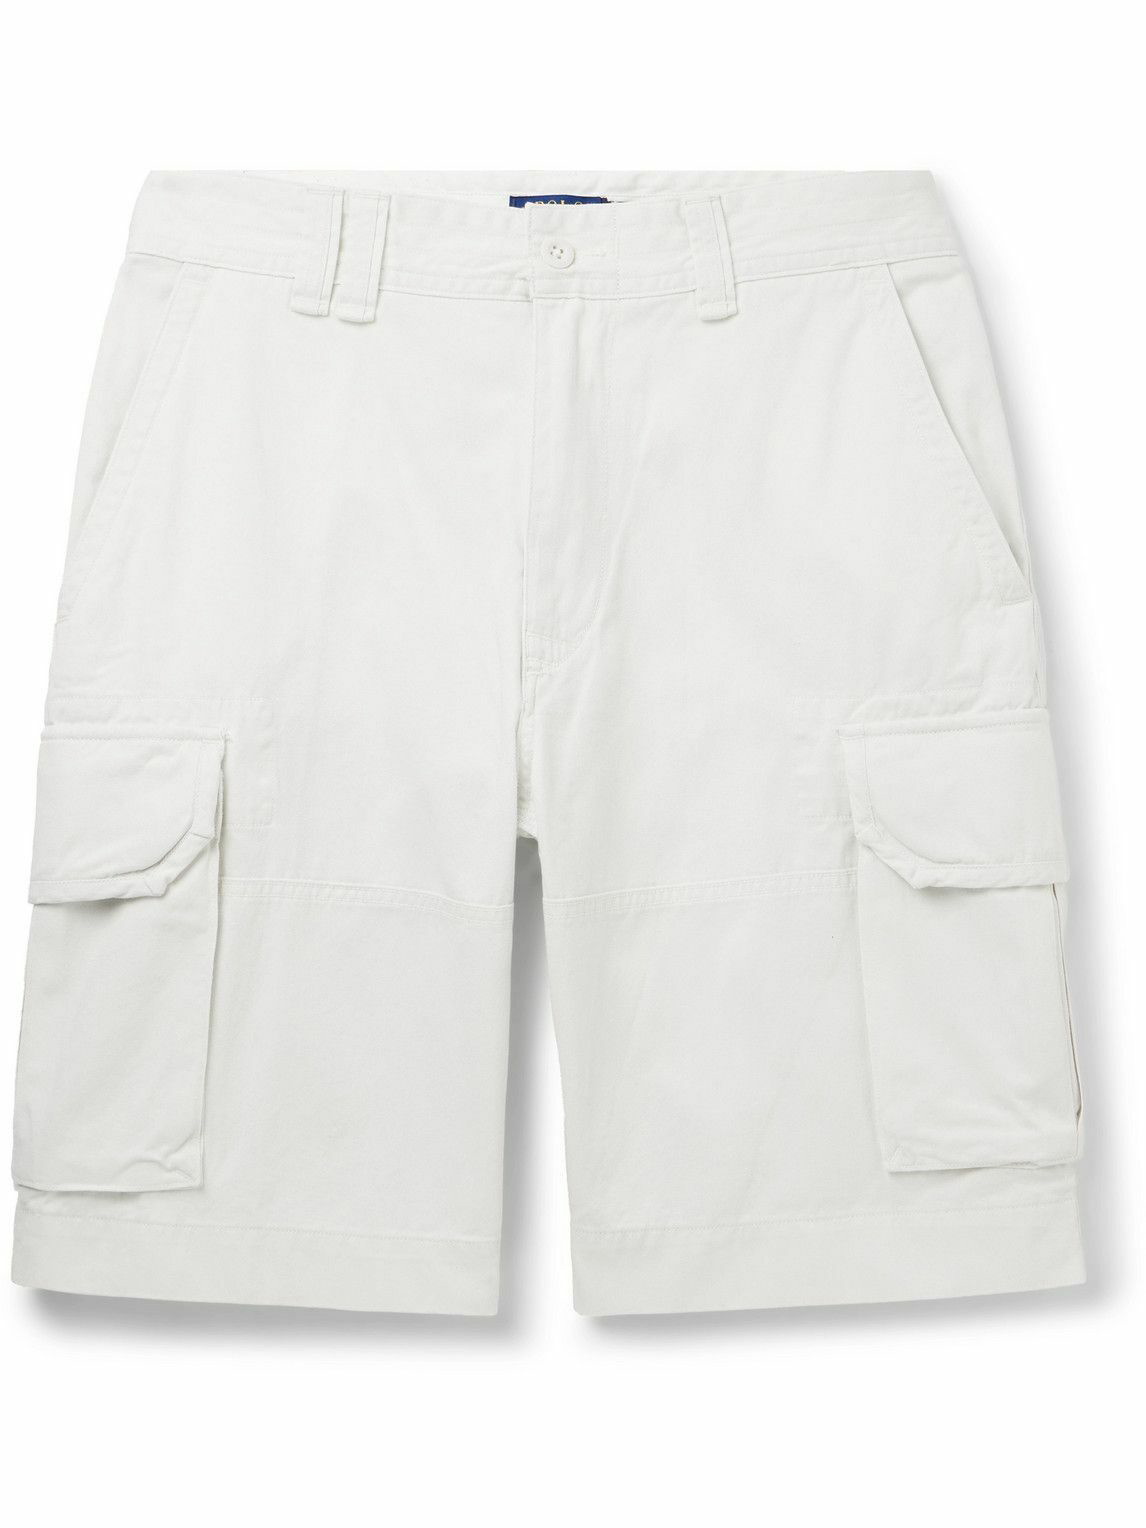 Polo Ralph Lauren, Stretch Twill Shorts, Aviator Navy